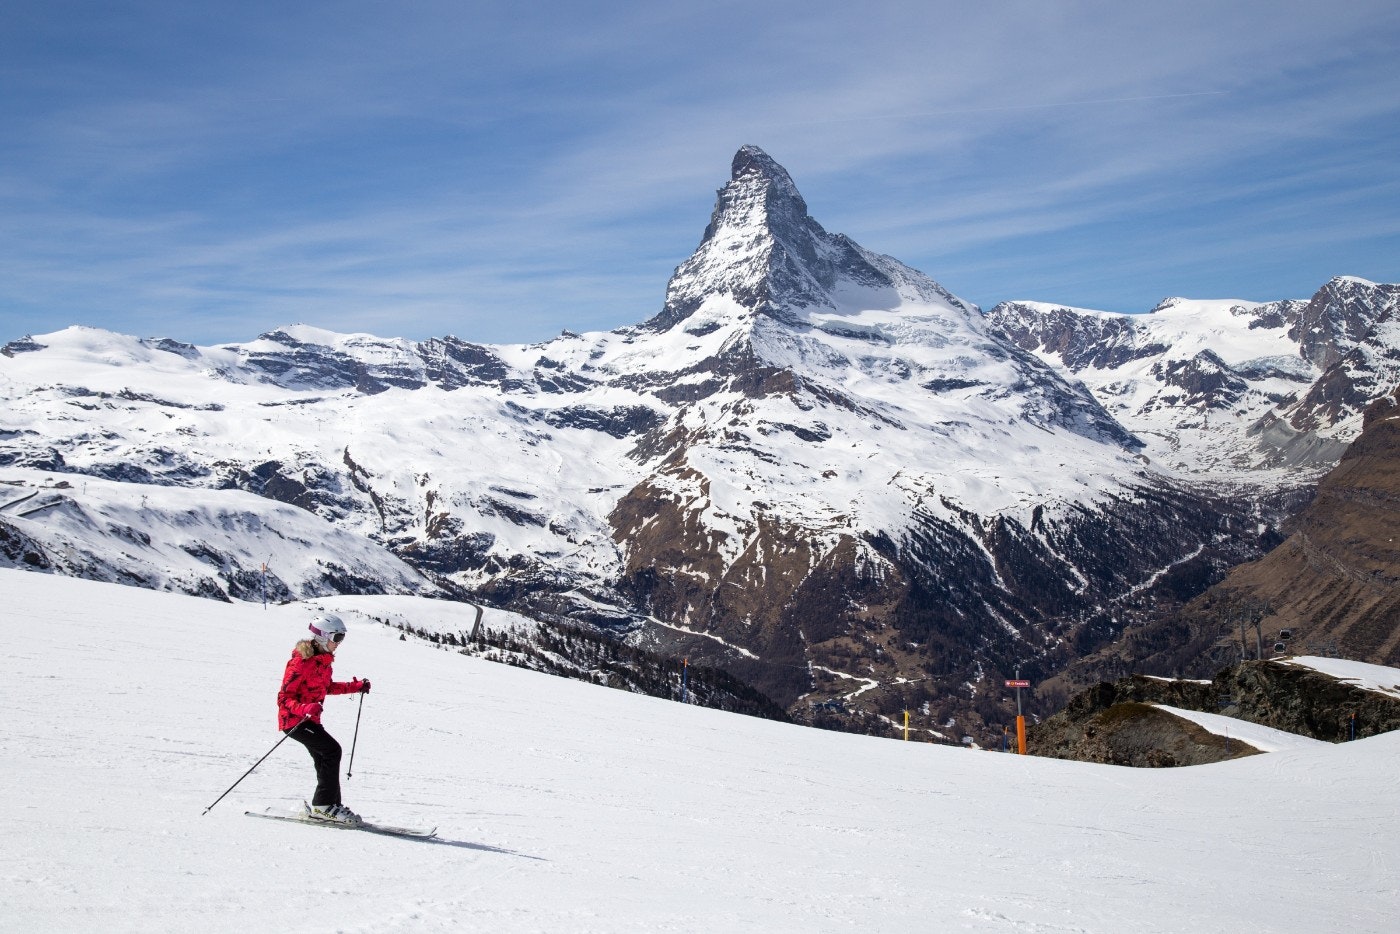 A woman skiing in front of the famous Matterhorn in Zermatt